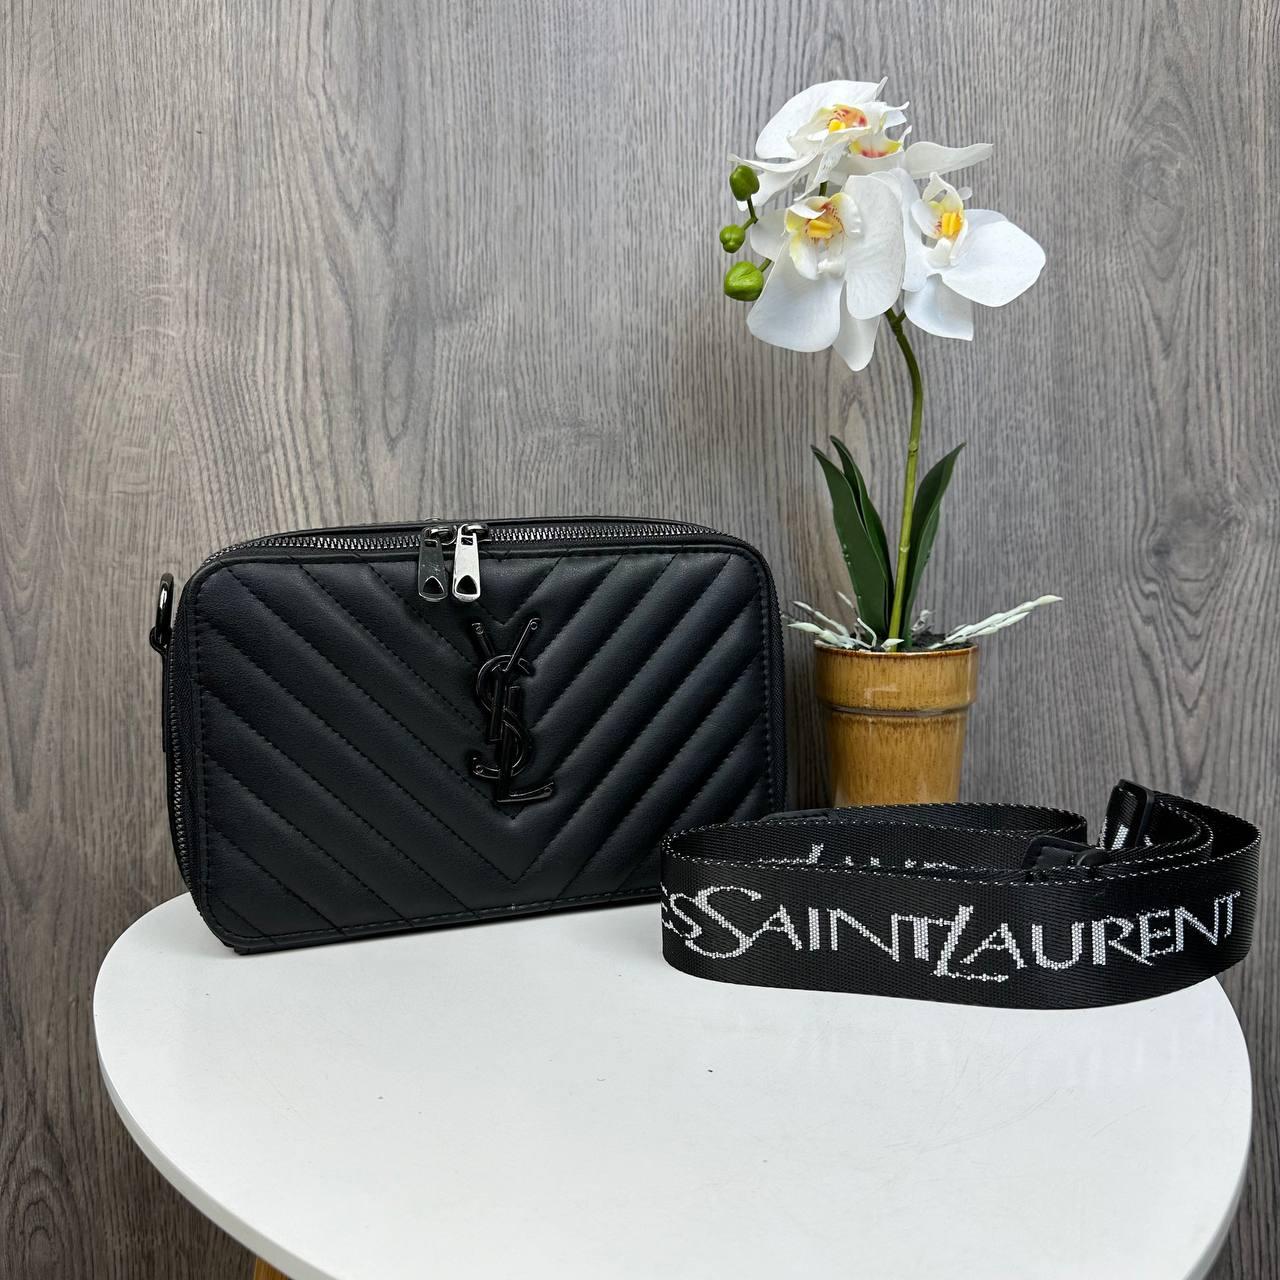 Якісна жіноча міні сумочка клатч YSL екошкіра, стильна сумка на плече Чорна з нікелем